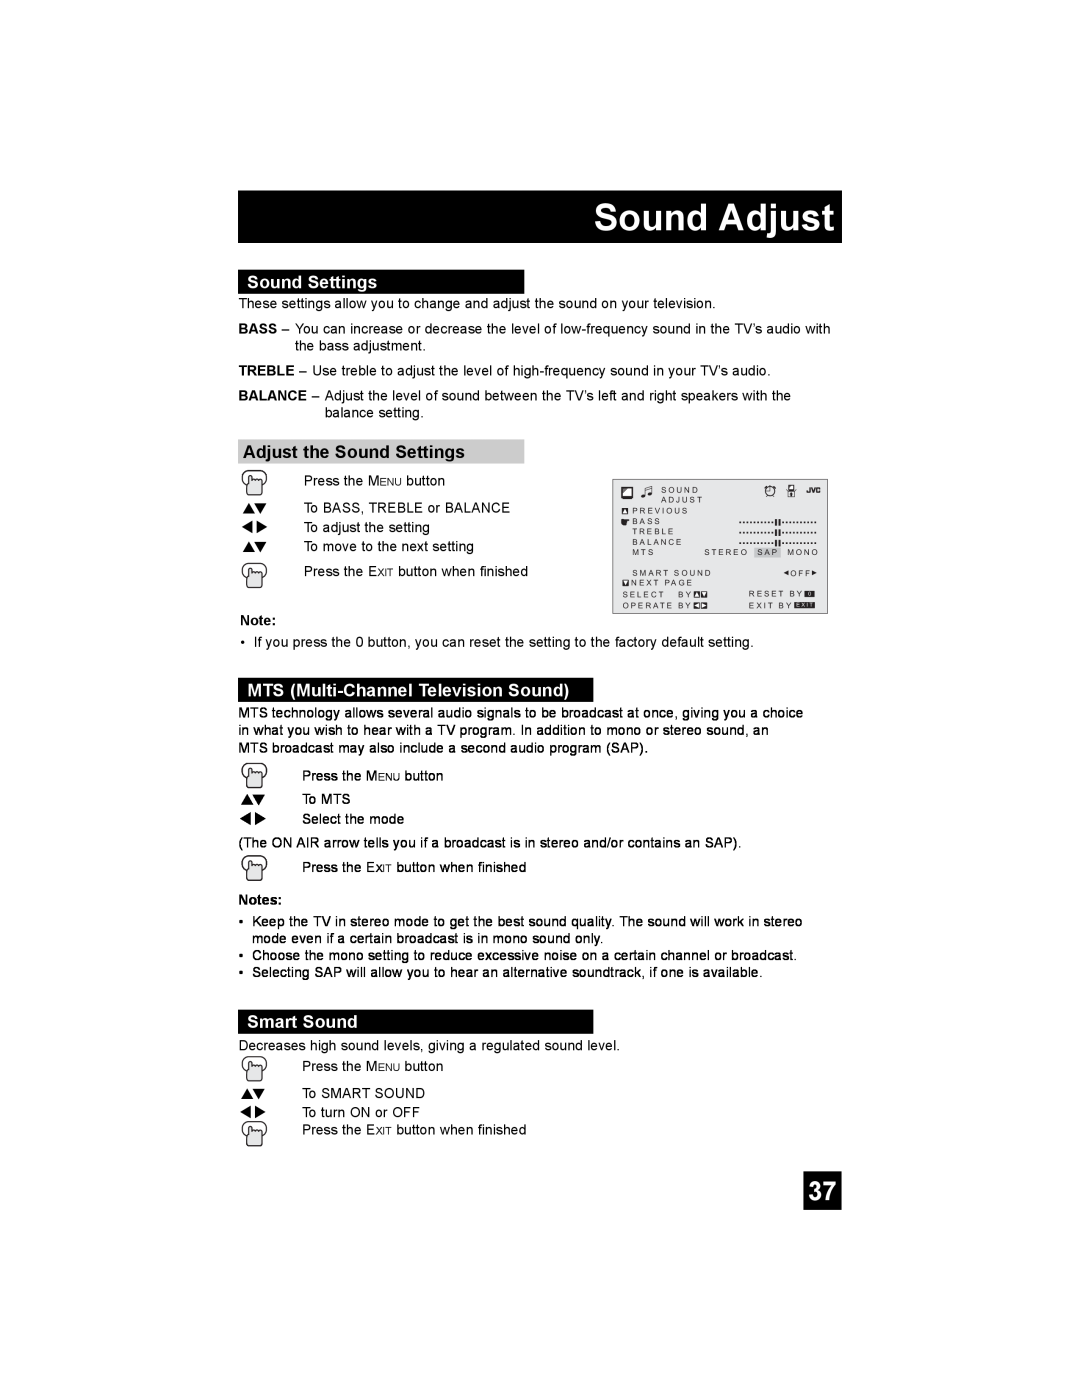 JVC AV 30W476 manual Sound Adjust, Adjust the Sound Settings, MTS Multi-Channel Television Sound, Smart Sound 